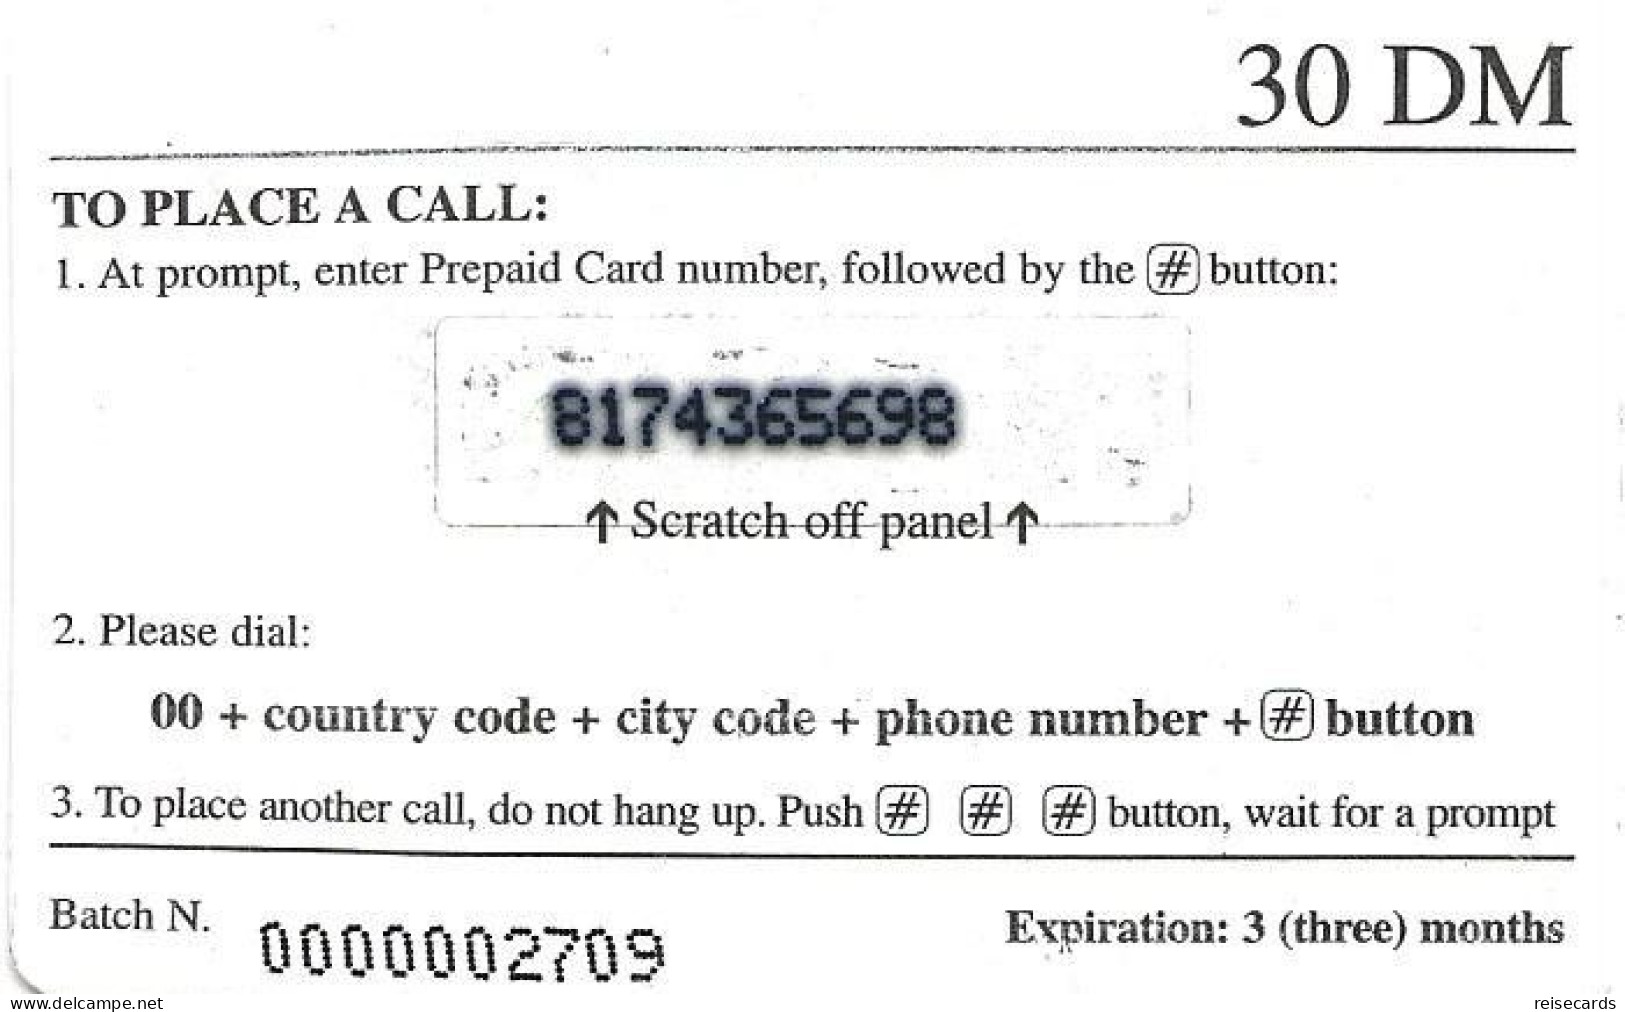 Germany: Prepaid GlobalOne - Kosovo 1999 - GSM, Voorafbetaald & Herlaadbare Kaarten